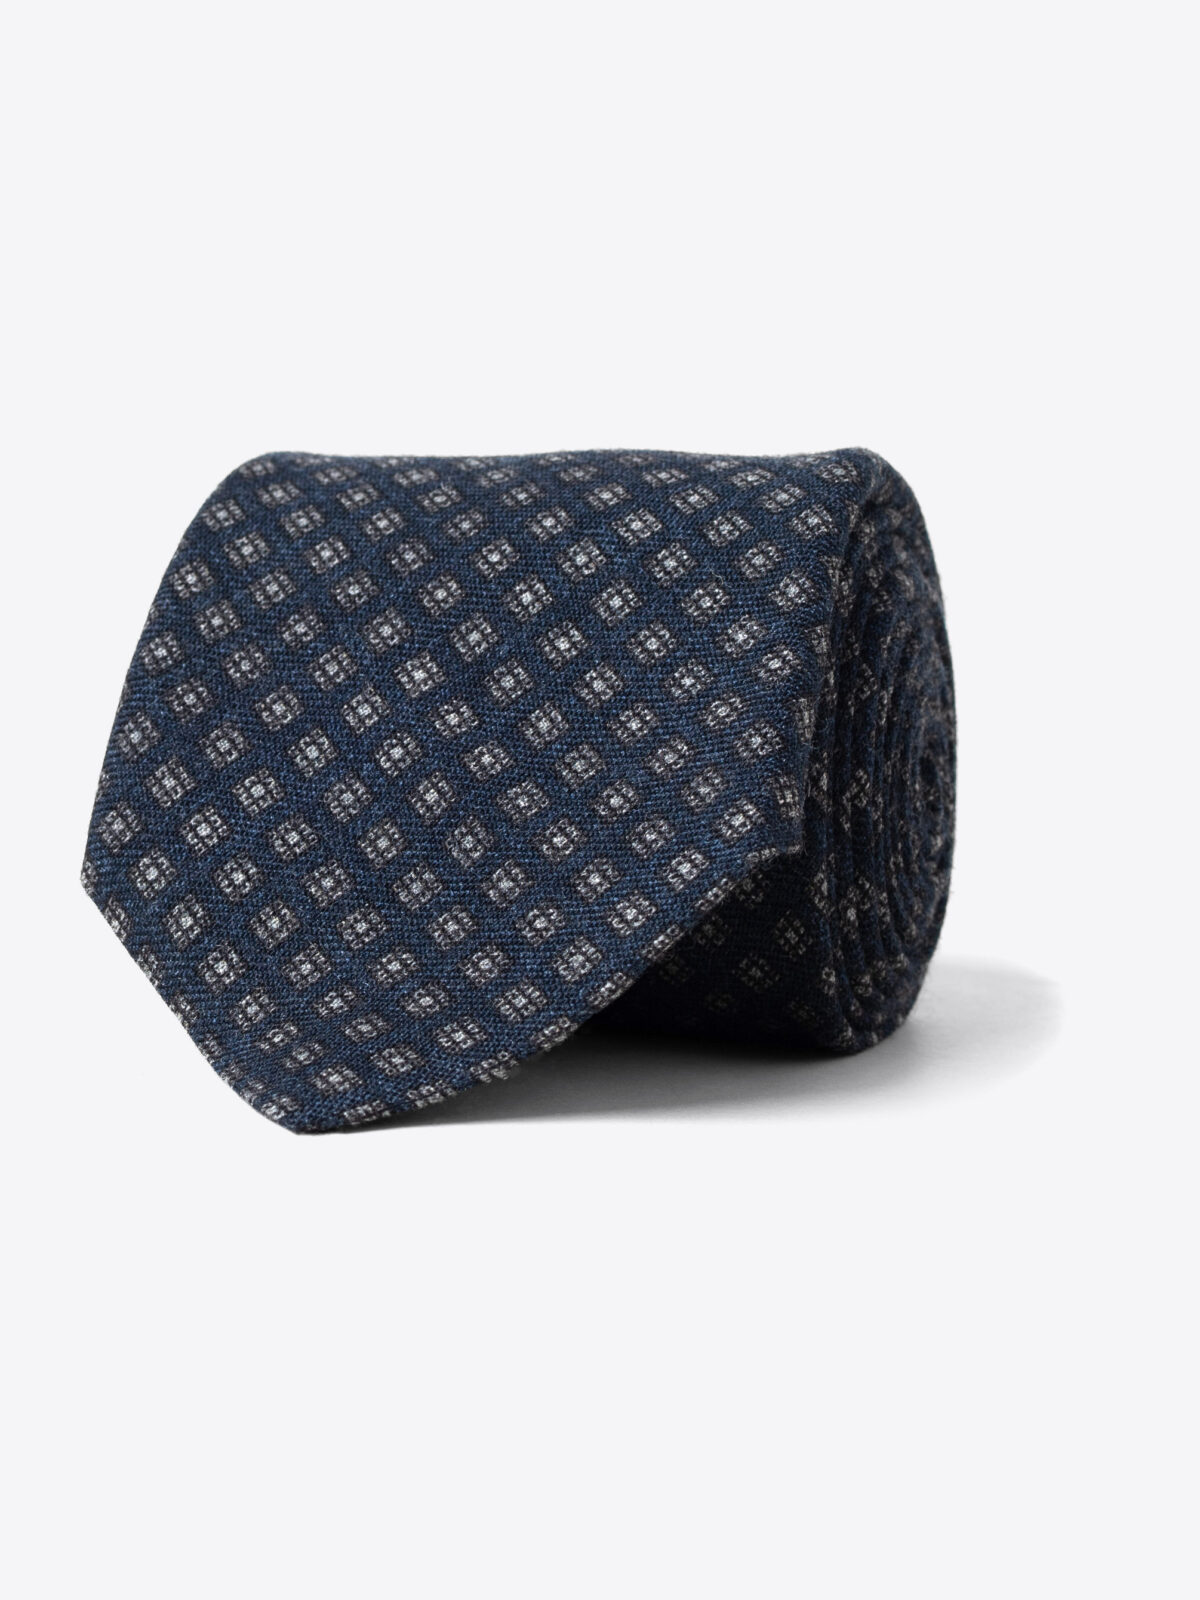 Navy and Grey Foulard Wool Tie